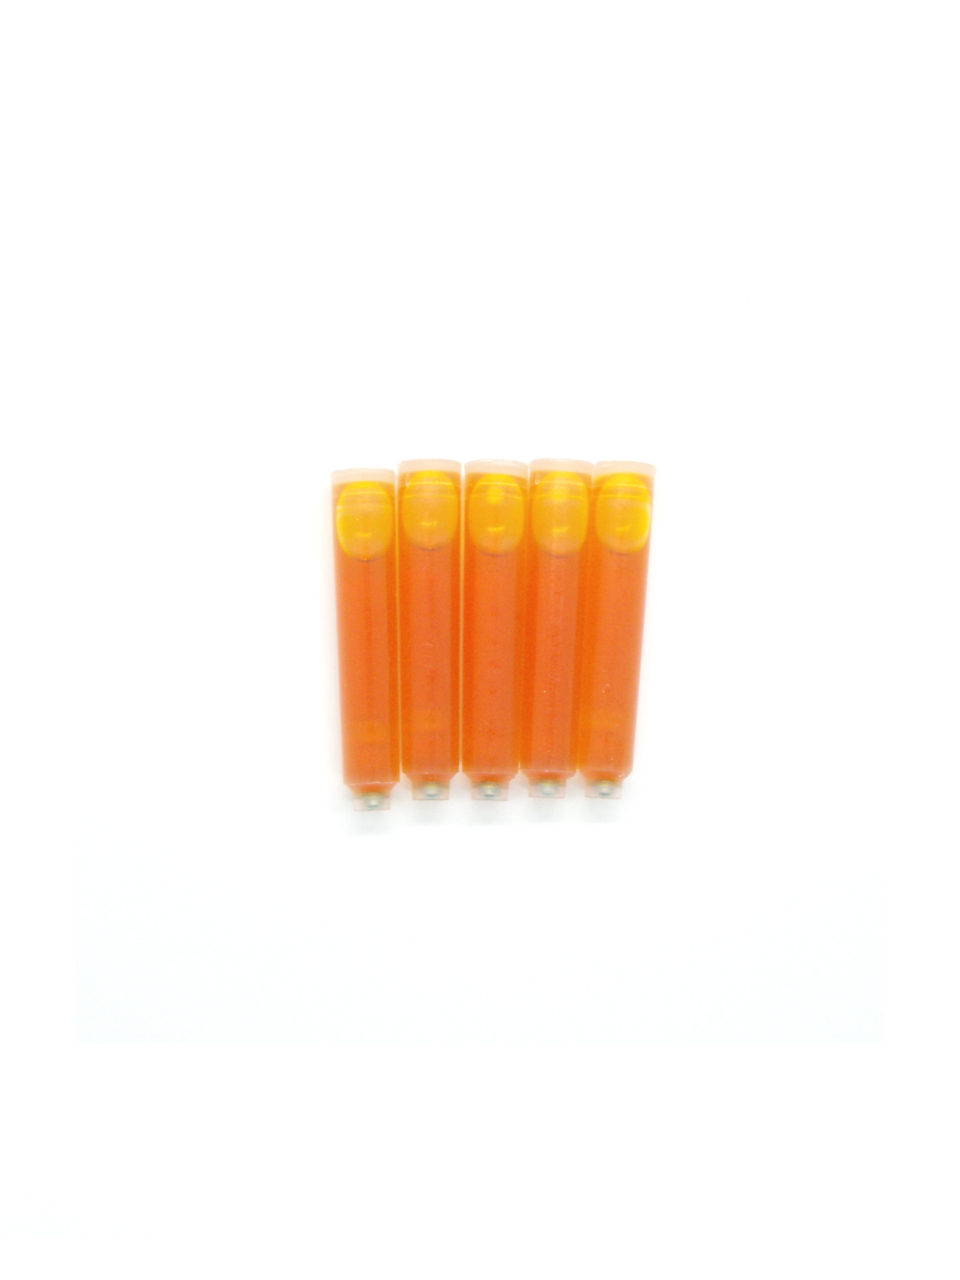 PenConverter Ink Cartridges For Luoshi Fountain Pens (Yellow)